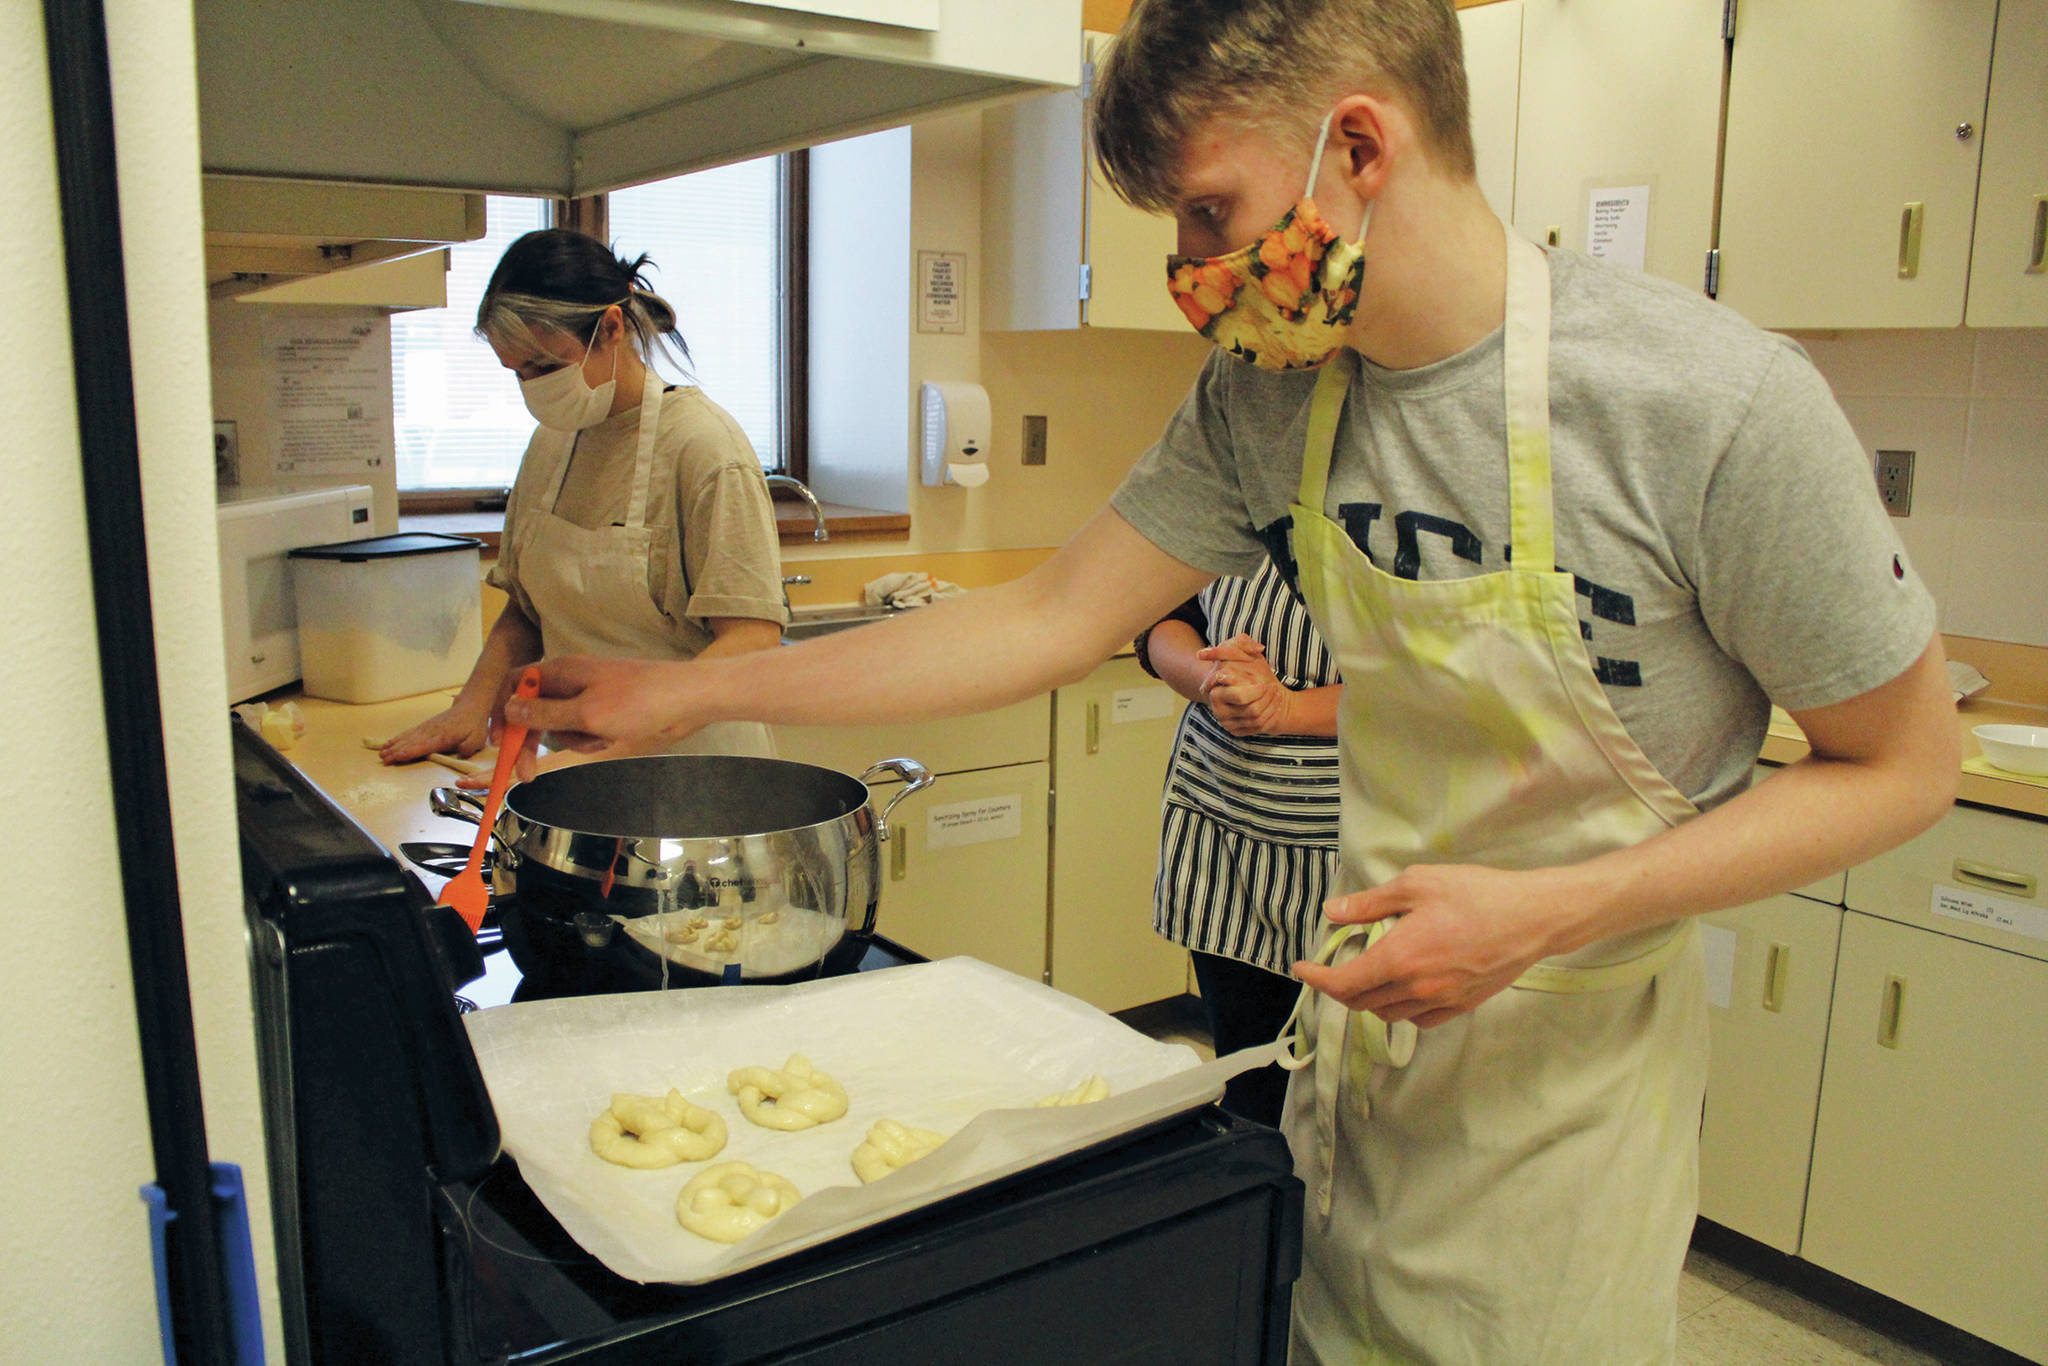 Zoe Adkins (left) and Emmet Wilkinson (right) prepare pretzels in a high school food and nutrition class at Homer High School in Homer, Alaska. (Photo by Katelyn Engebretsen/Homer High Yearbook)